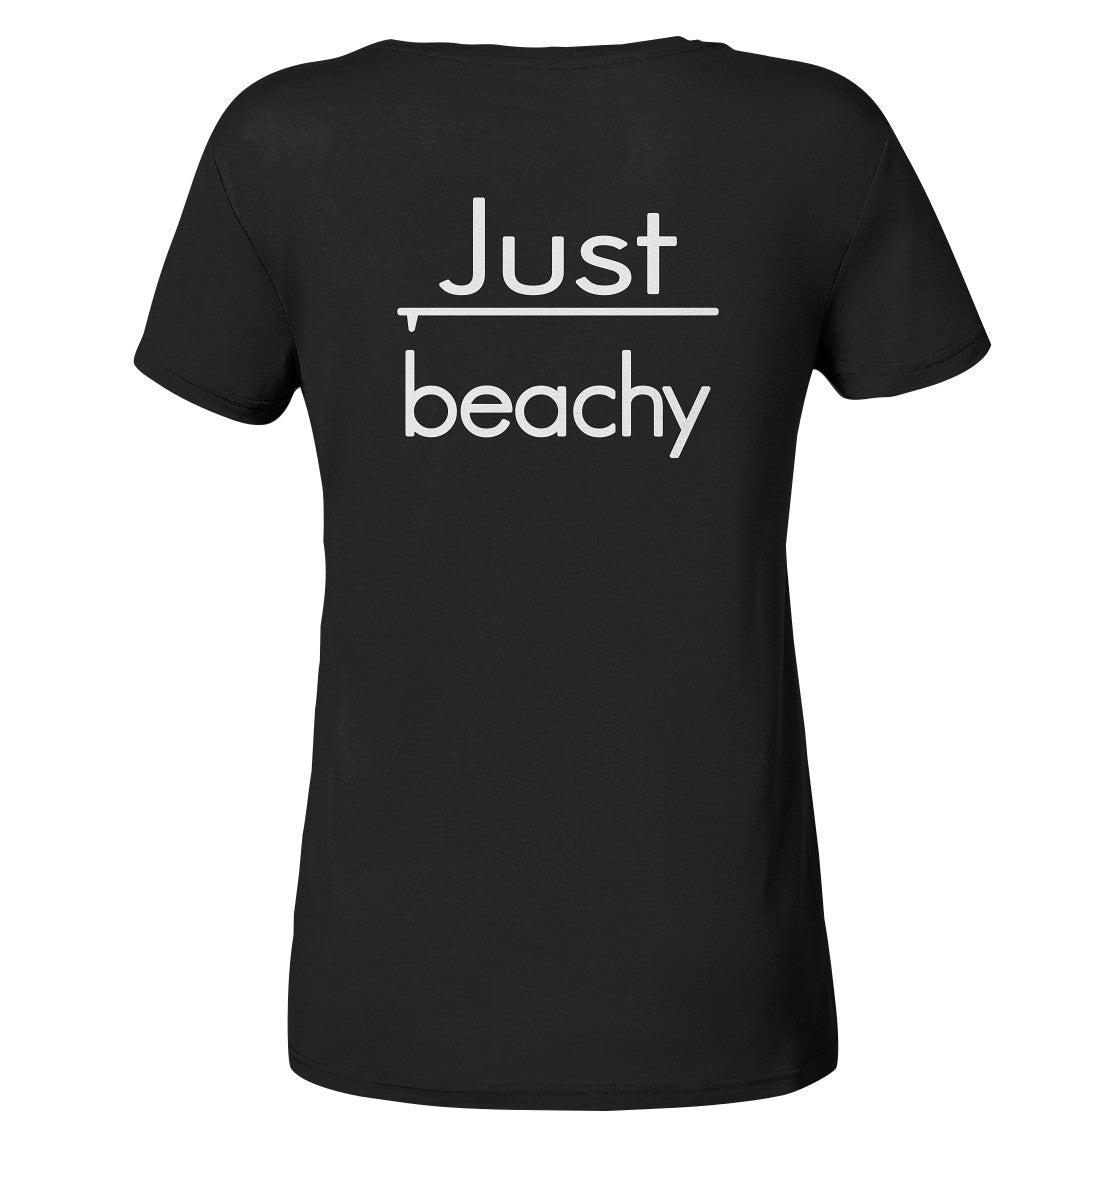 Boardtime-Just beachy - Ladies Organic Shirt